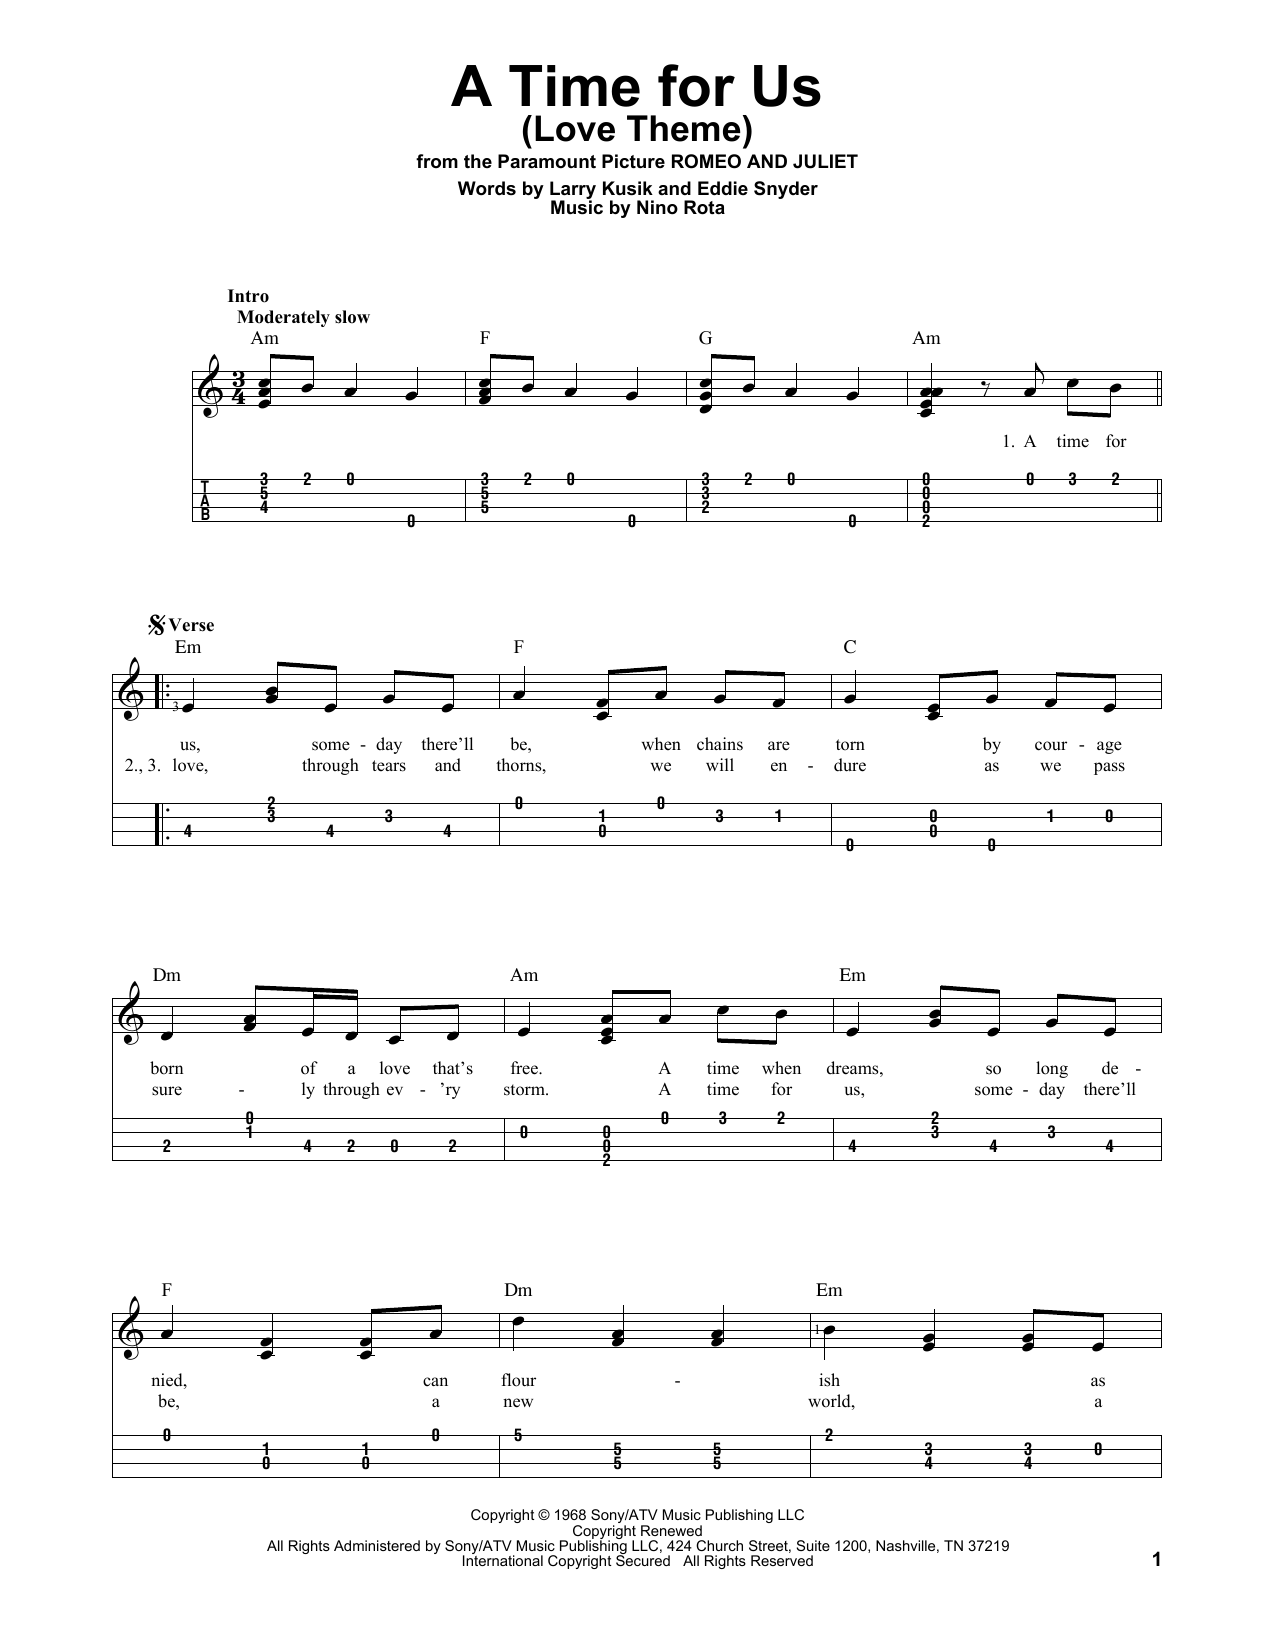 Download Nino Rota A Time For Us (Love Theme) Sheet Music